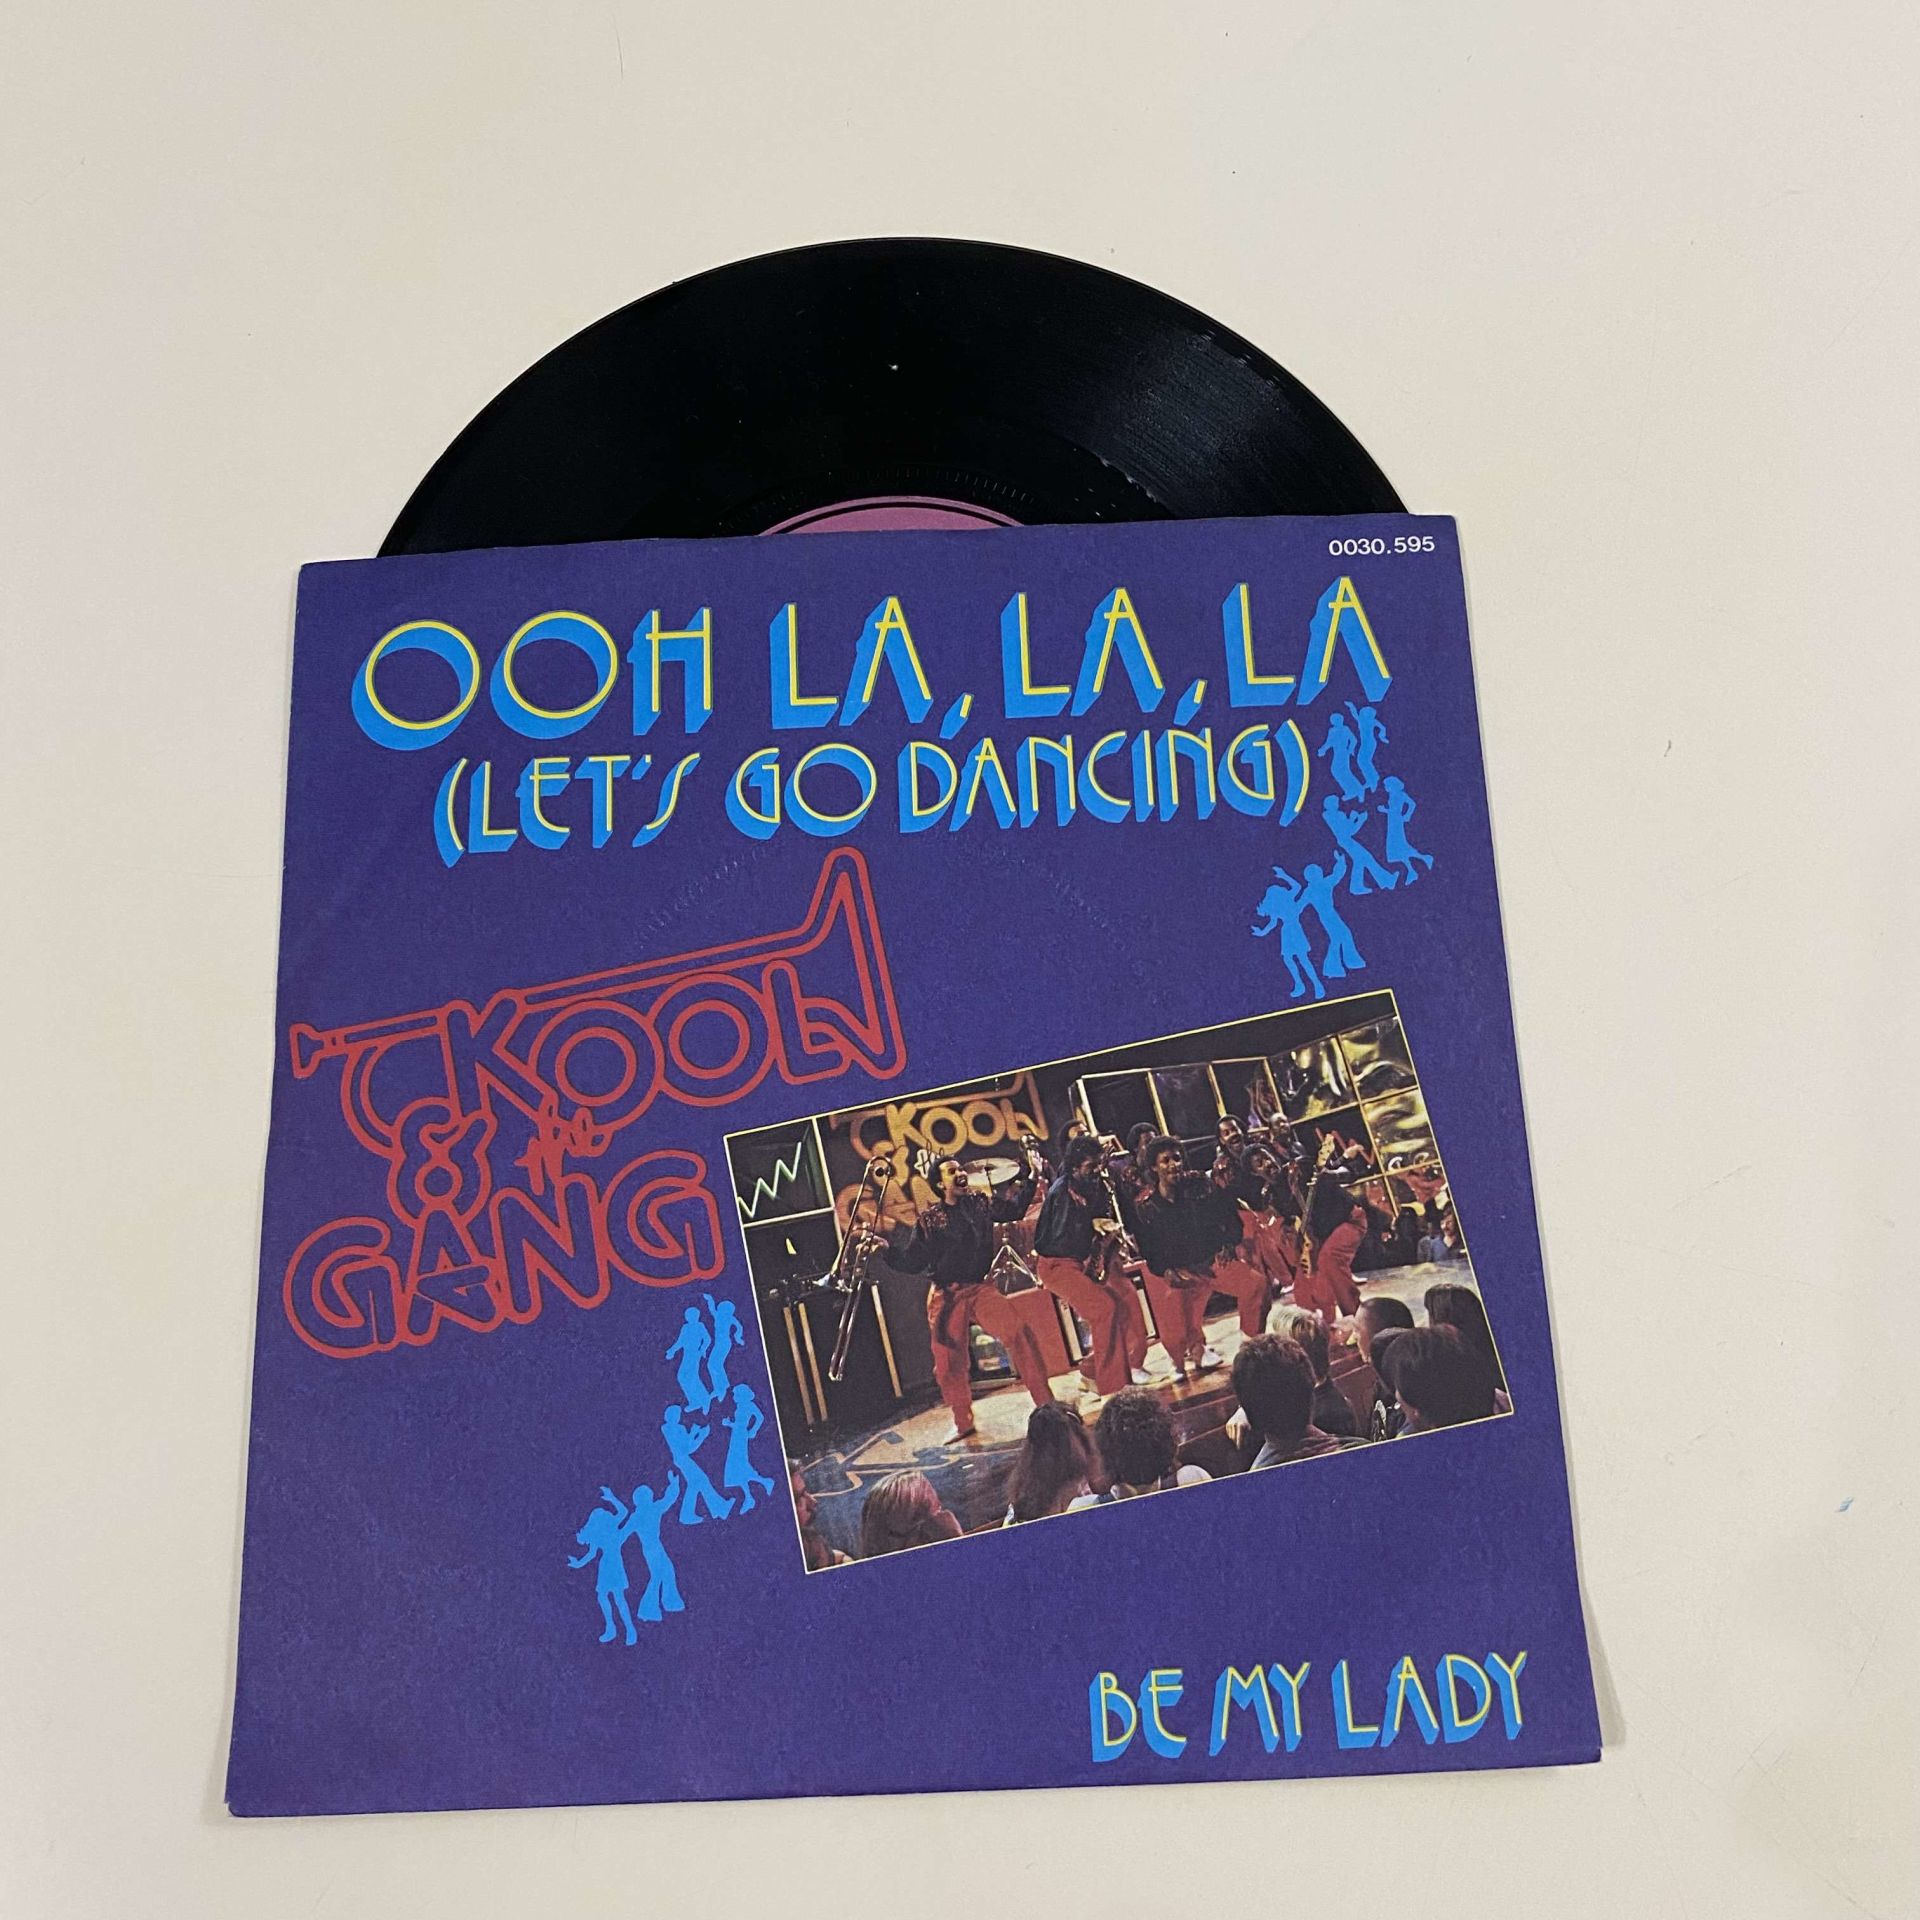 Kool  The Gang – Ooh La La La (Let's Go Dancing) Plak, CD, DVD Satın Al